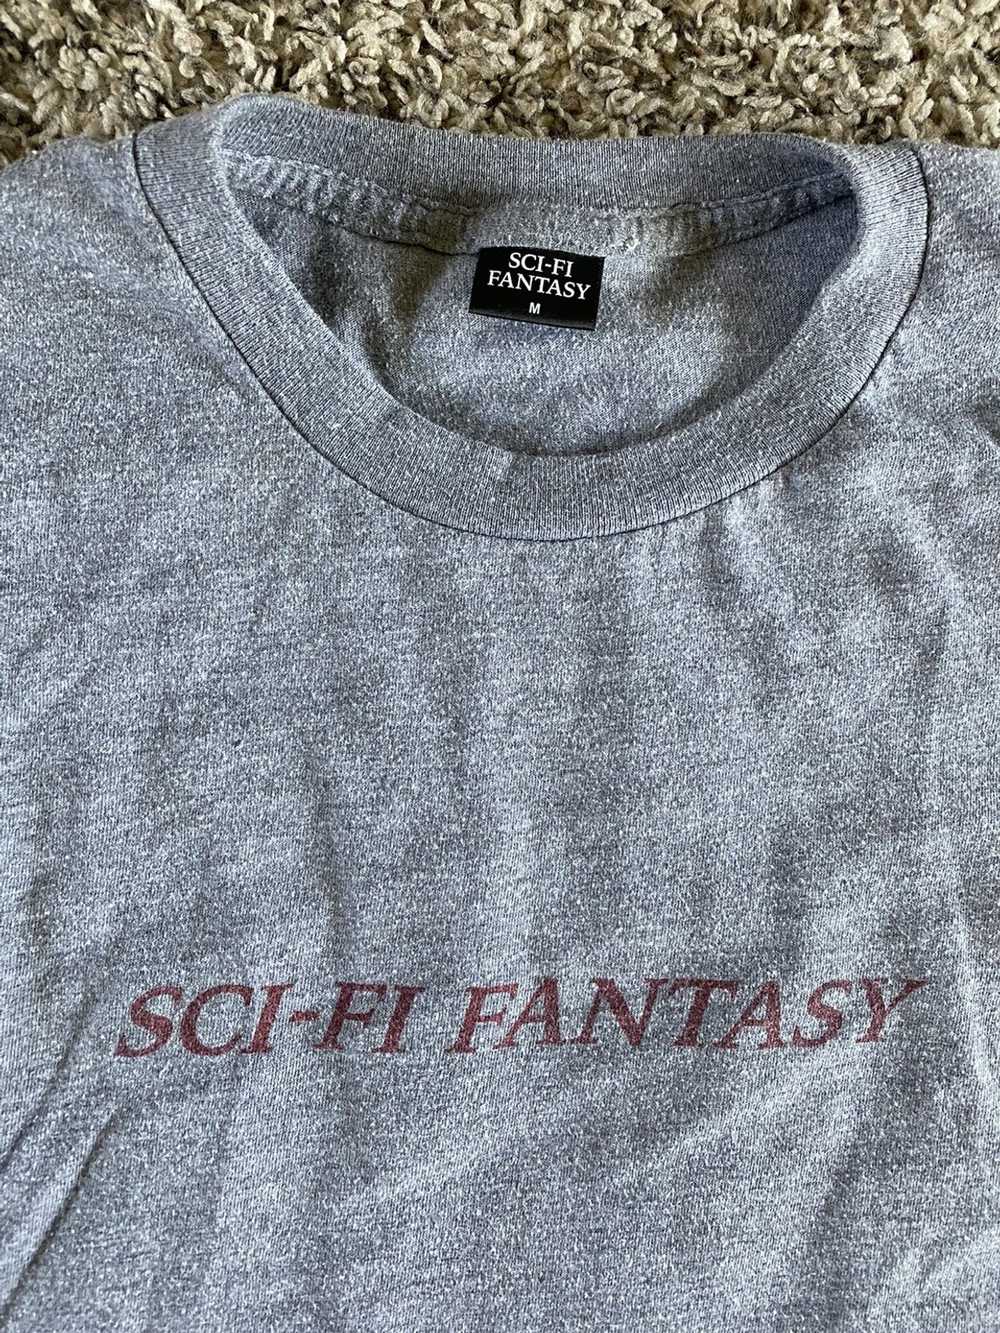 Sci-Fi Fantasy Text shirt - image 2